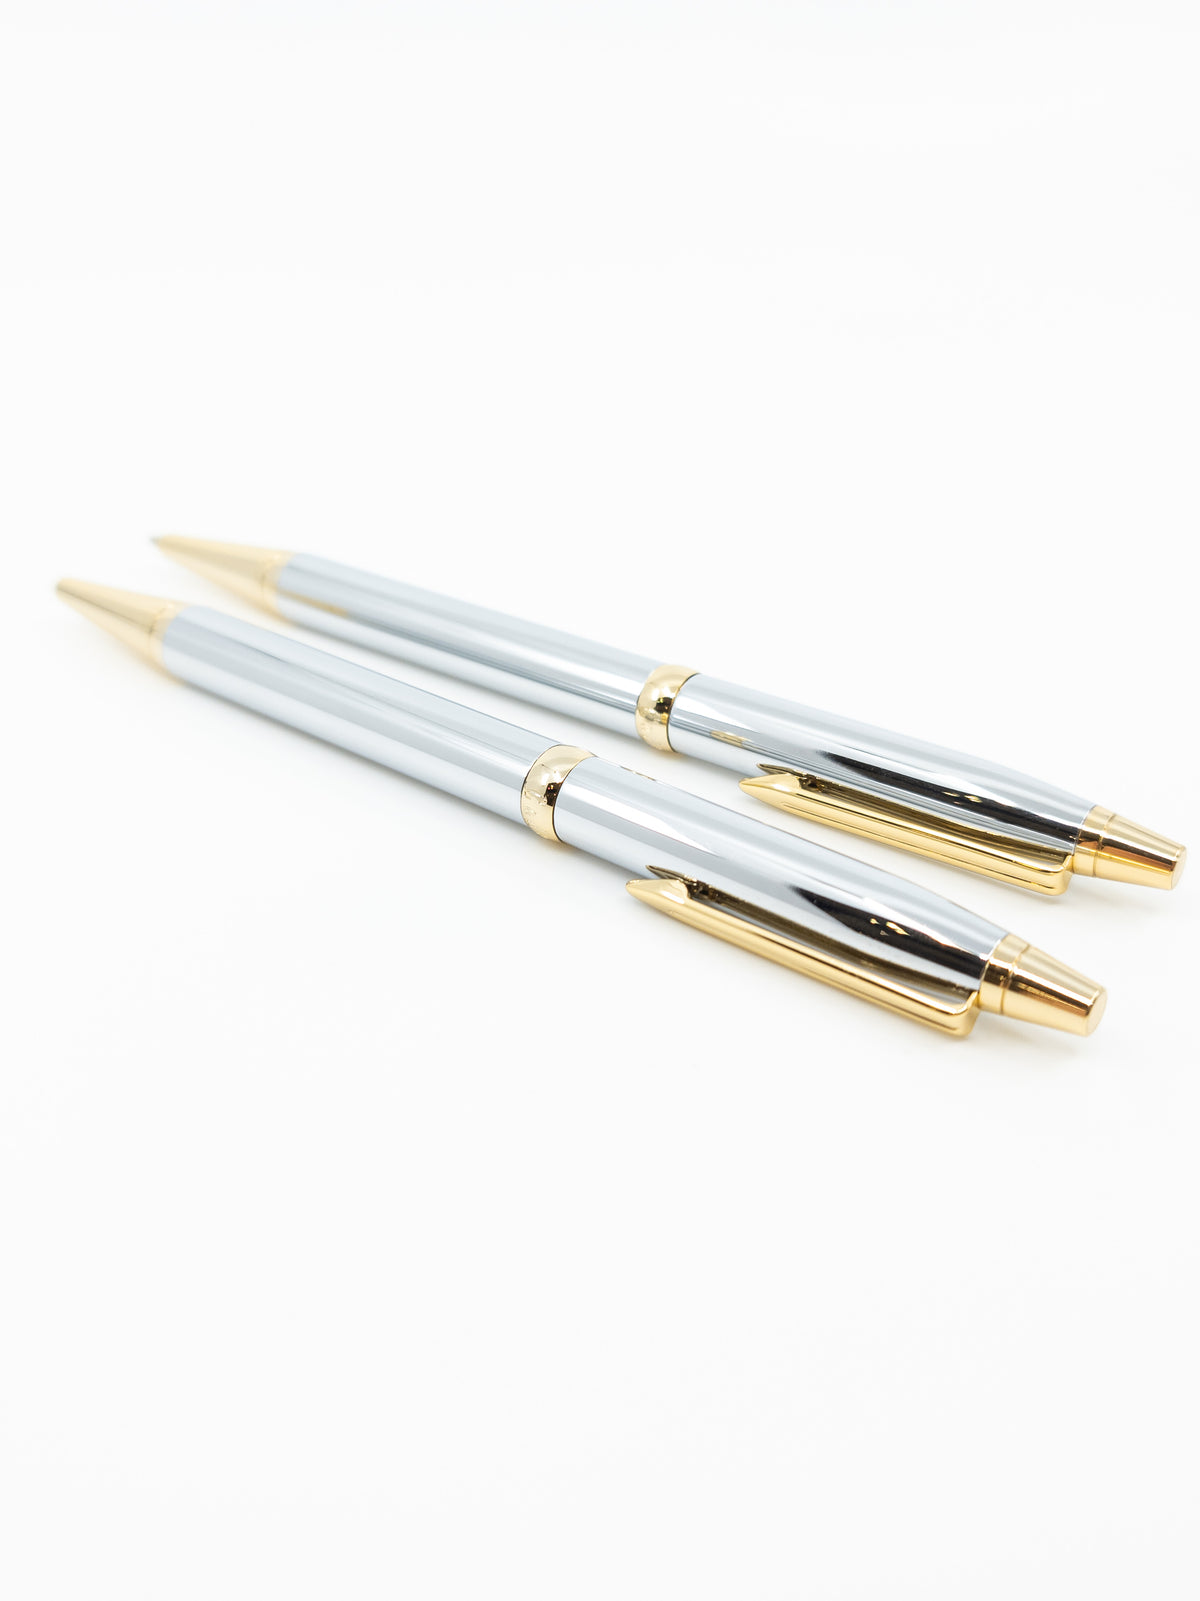 Silver &amp; Gold Pen/Pencil Set